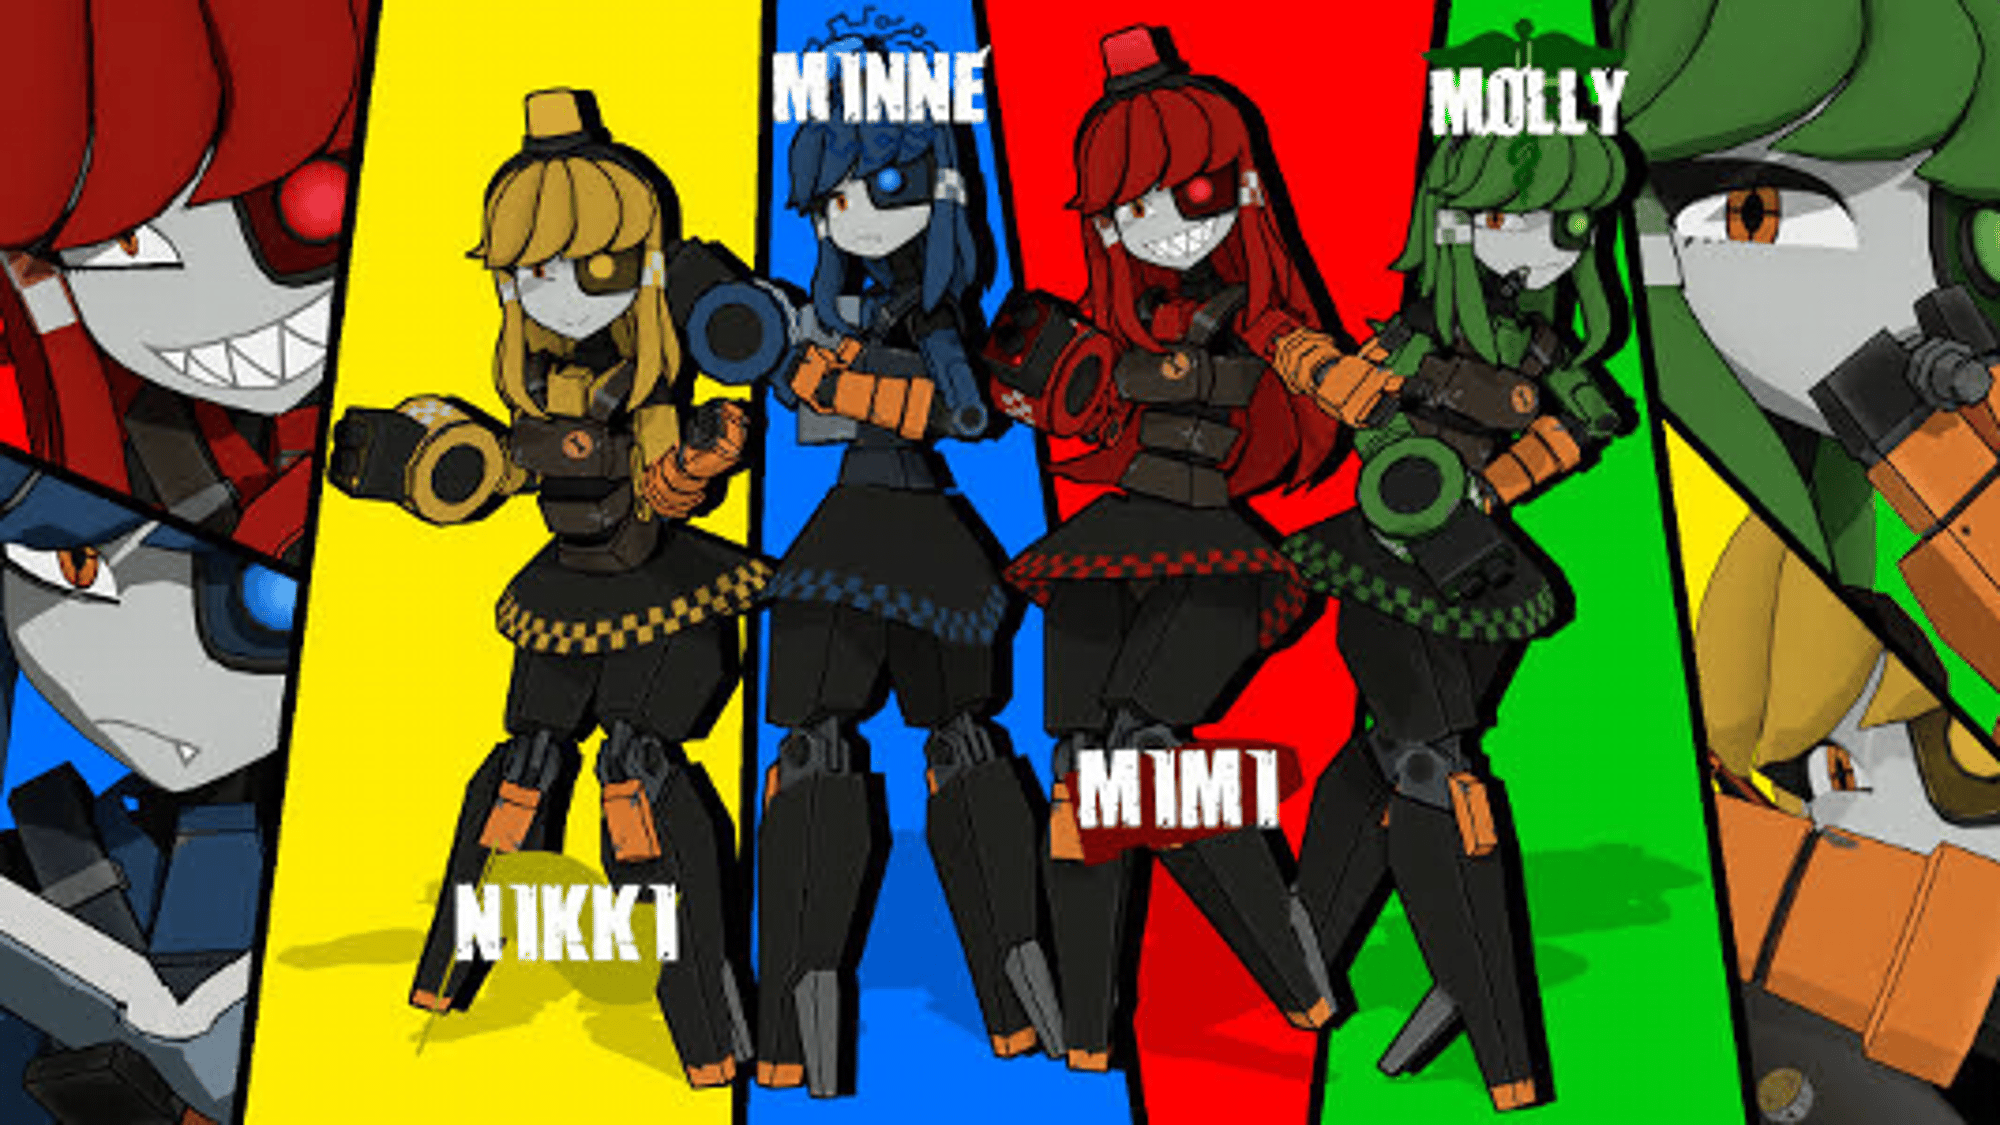 The mini sentries